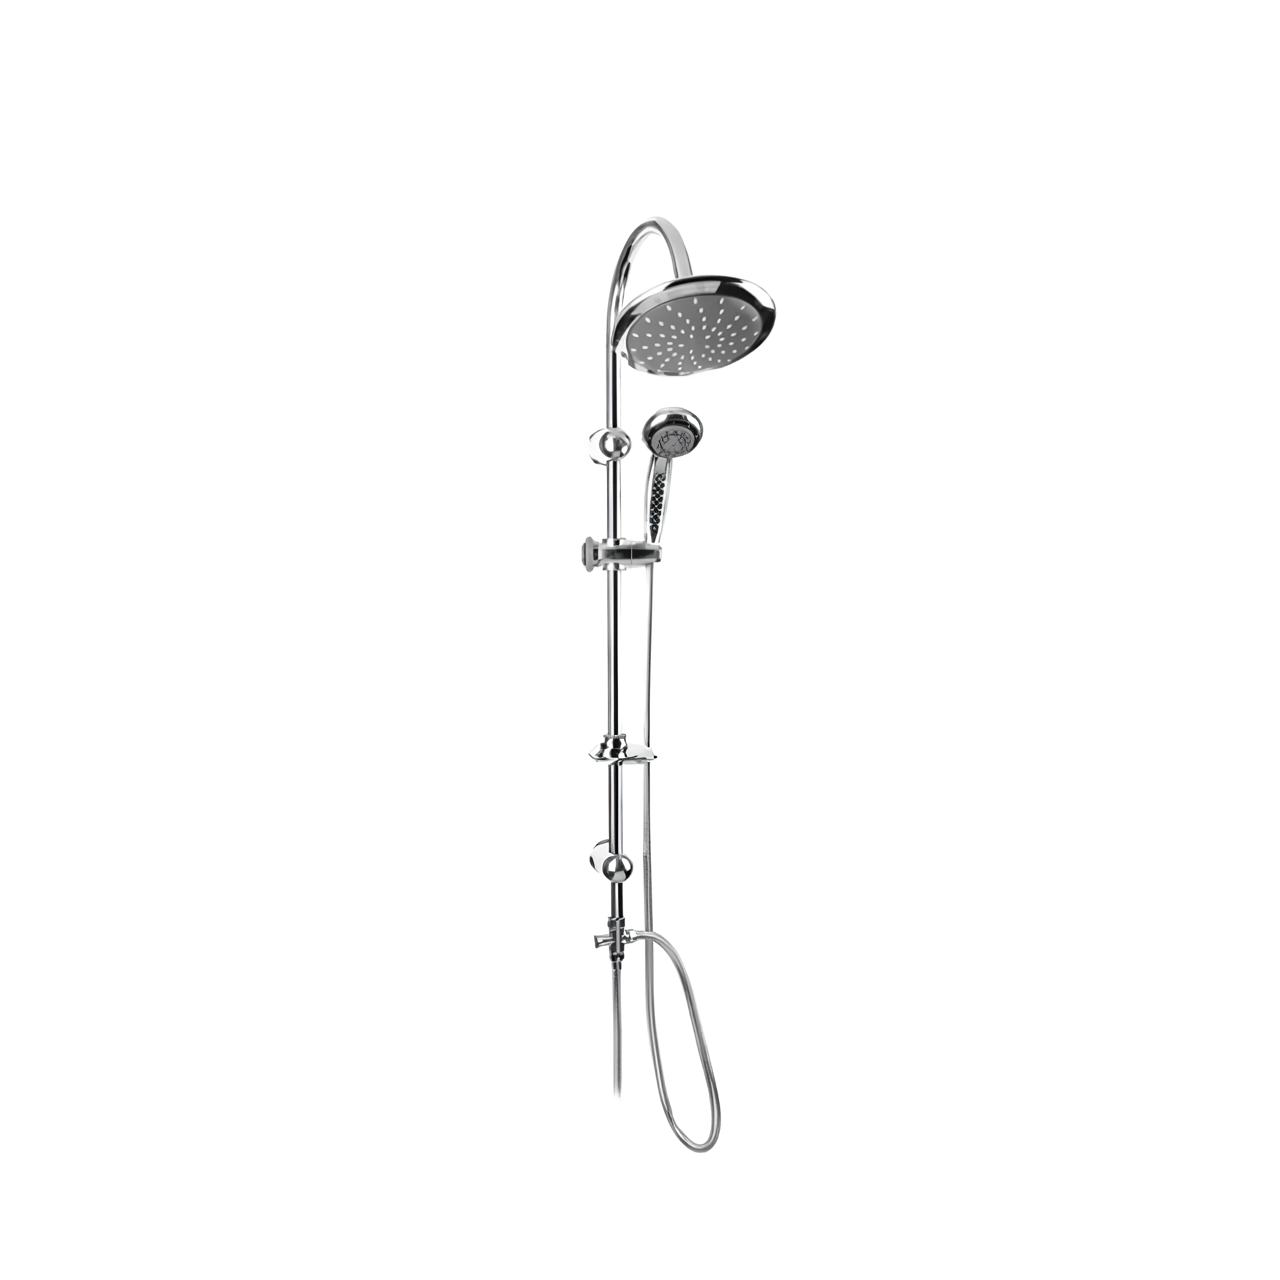 L718C Rainfall Shower Head and Handheld Showerhead Combo Shower System with Slide Bar Chrome Shower Set